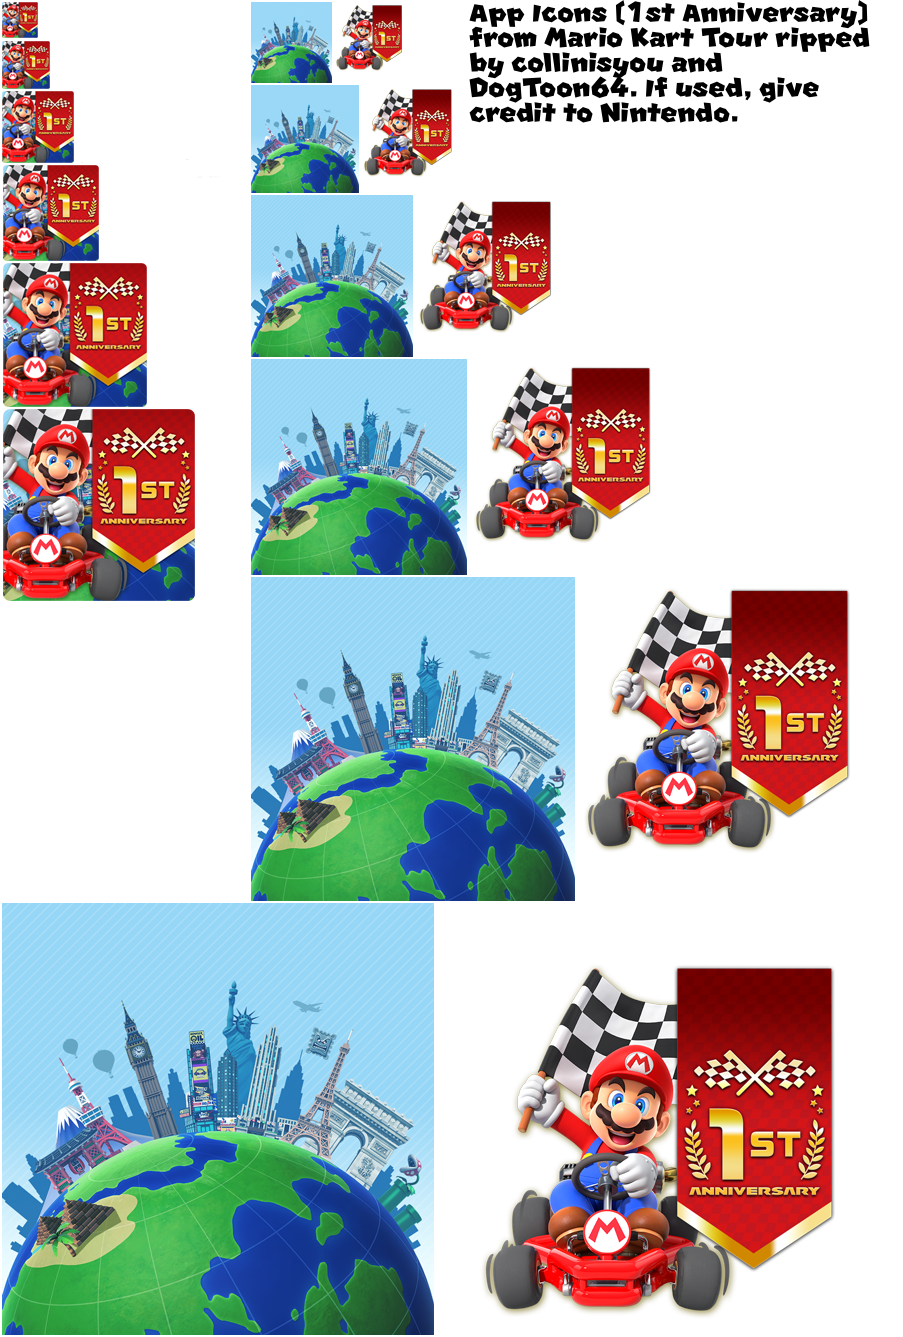 Mario Kart Tour - App Icons (1st Anniversary)